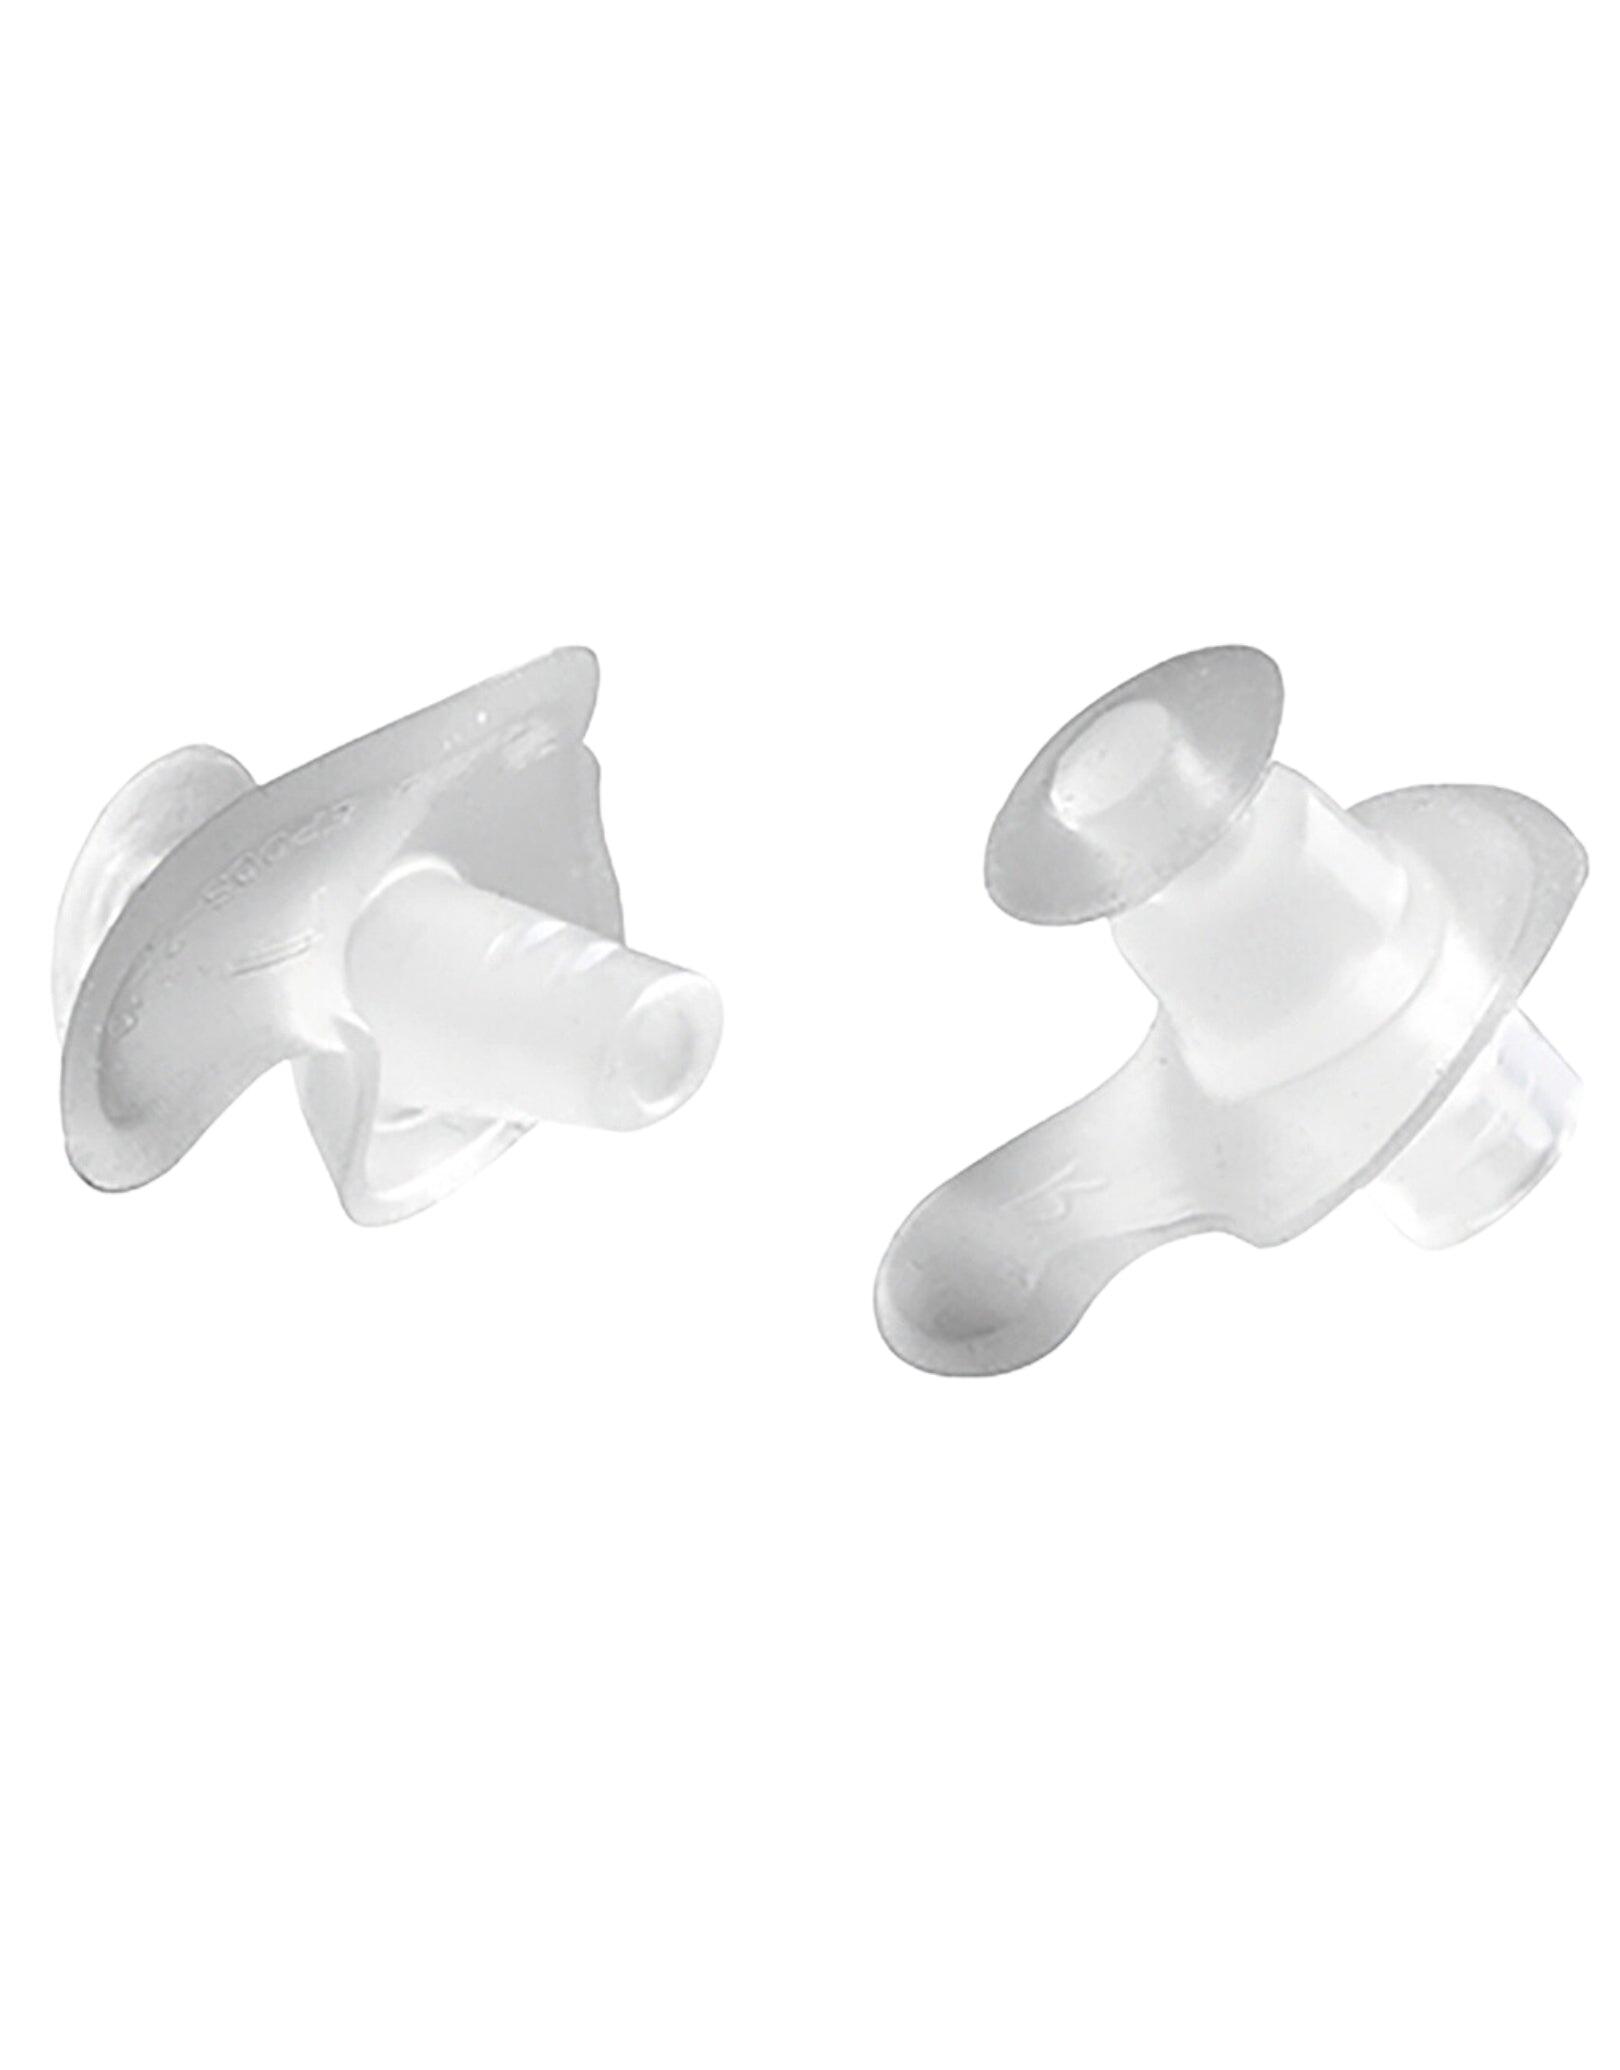 AQUAFEEL Aquafeel Silicone Ear Plugs - Clear